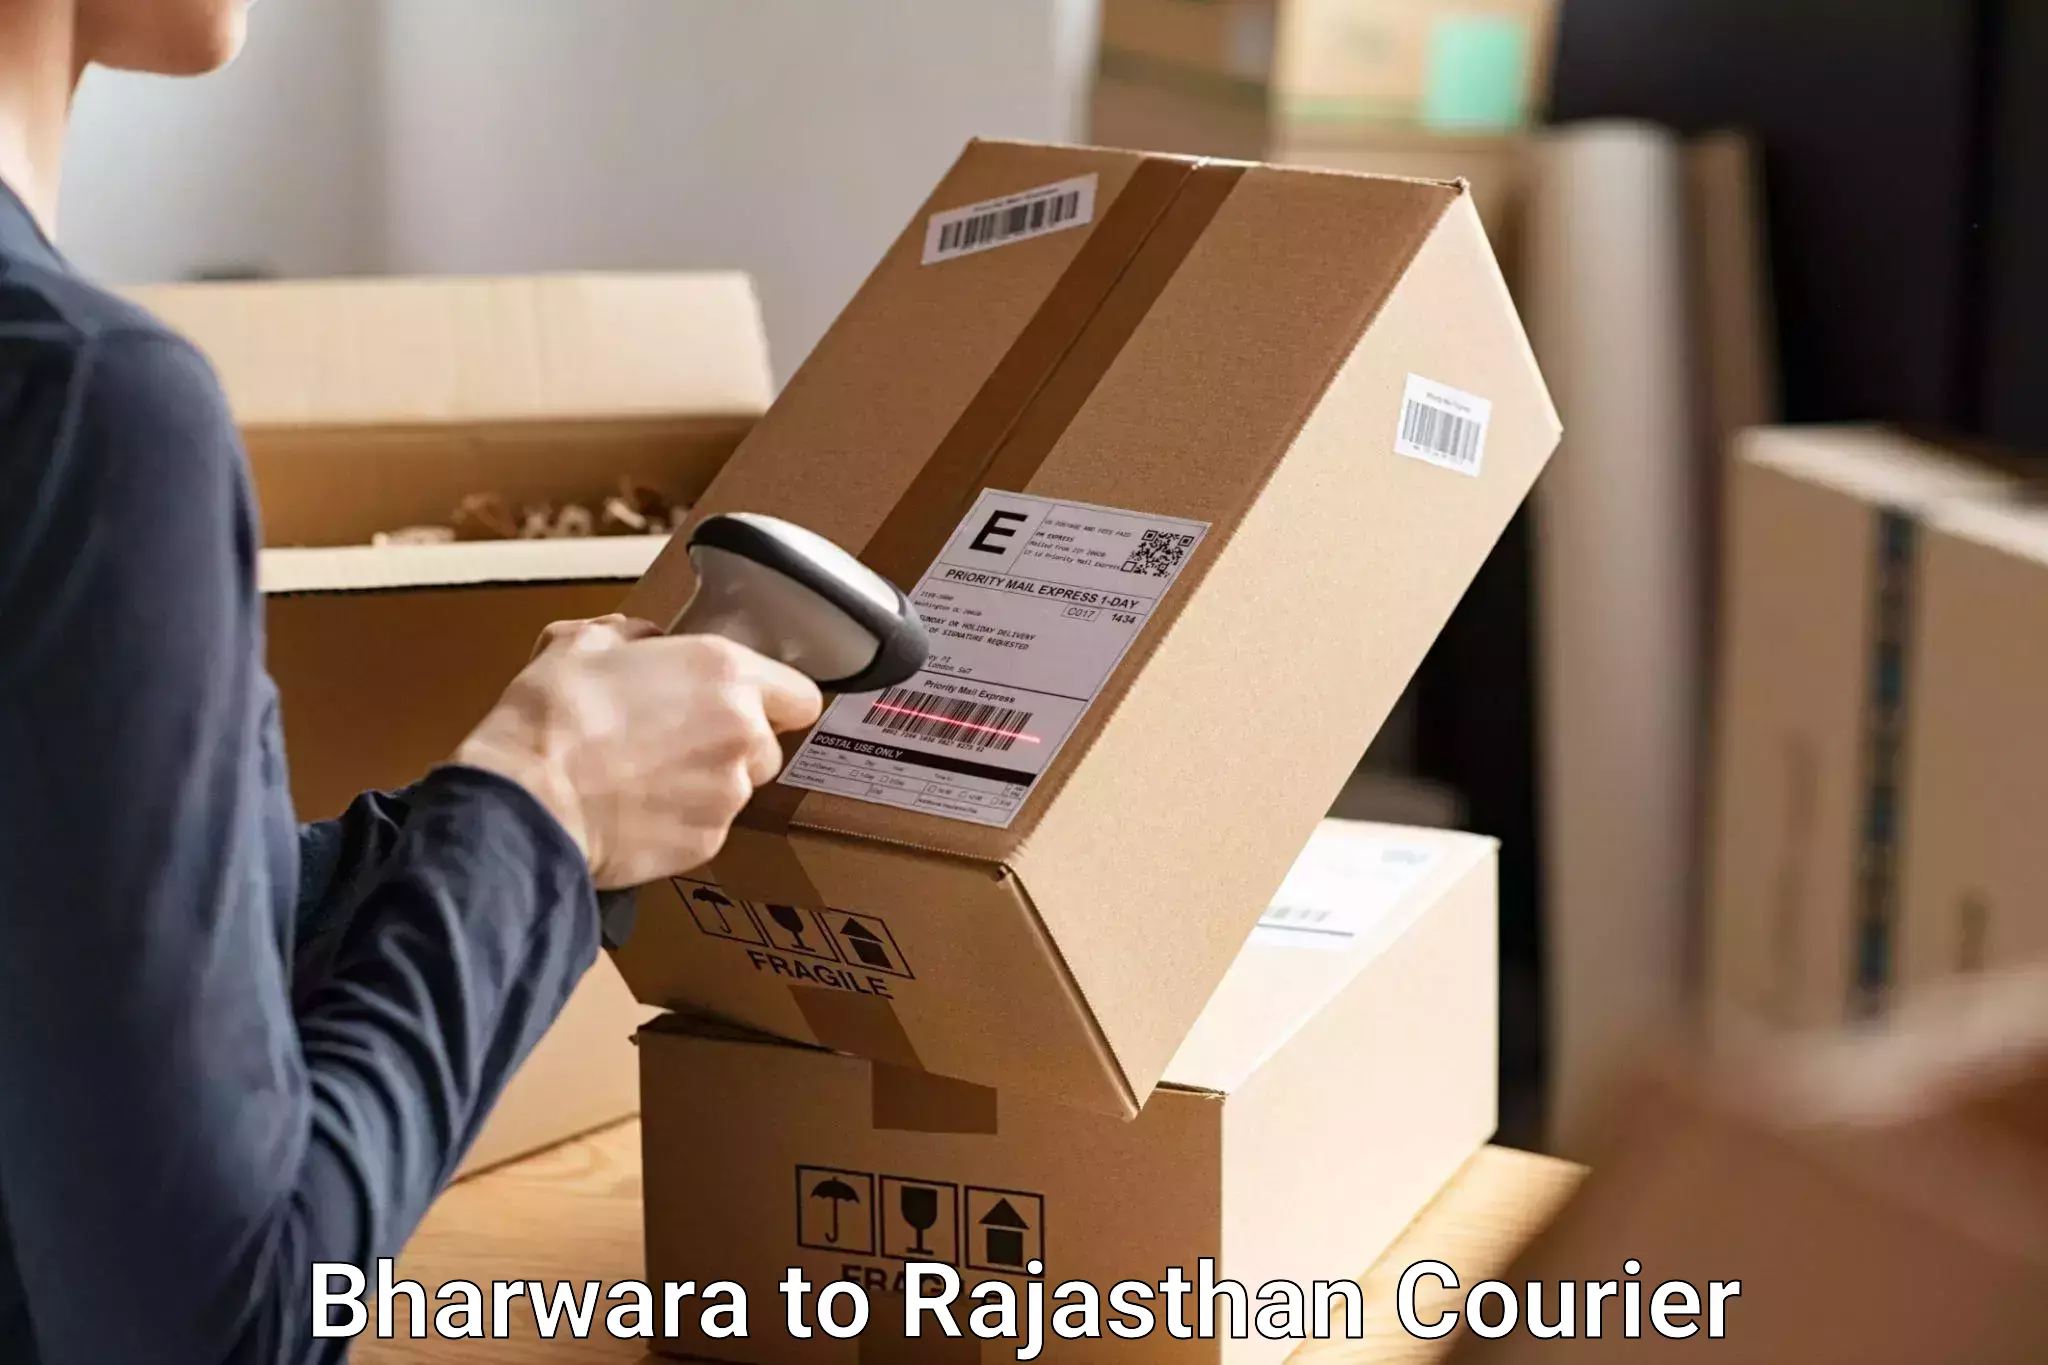 Baggage relocation service Bharwara to Sambhar